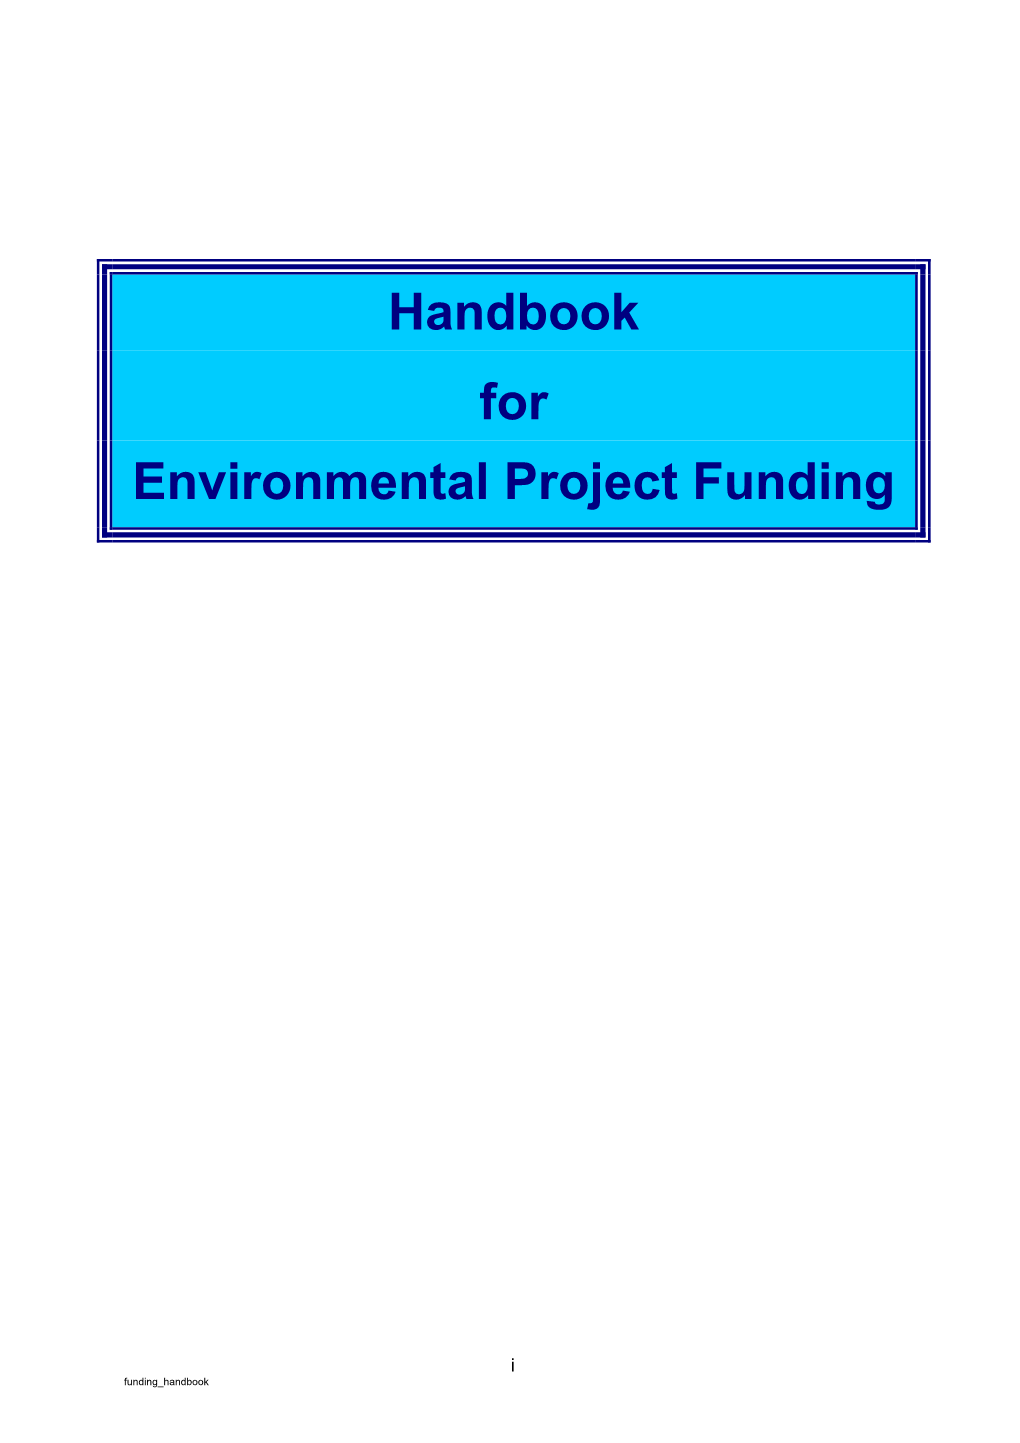 Handbook for Environmental Project Funding